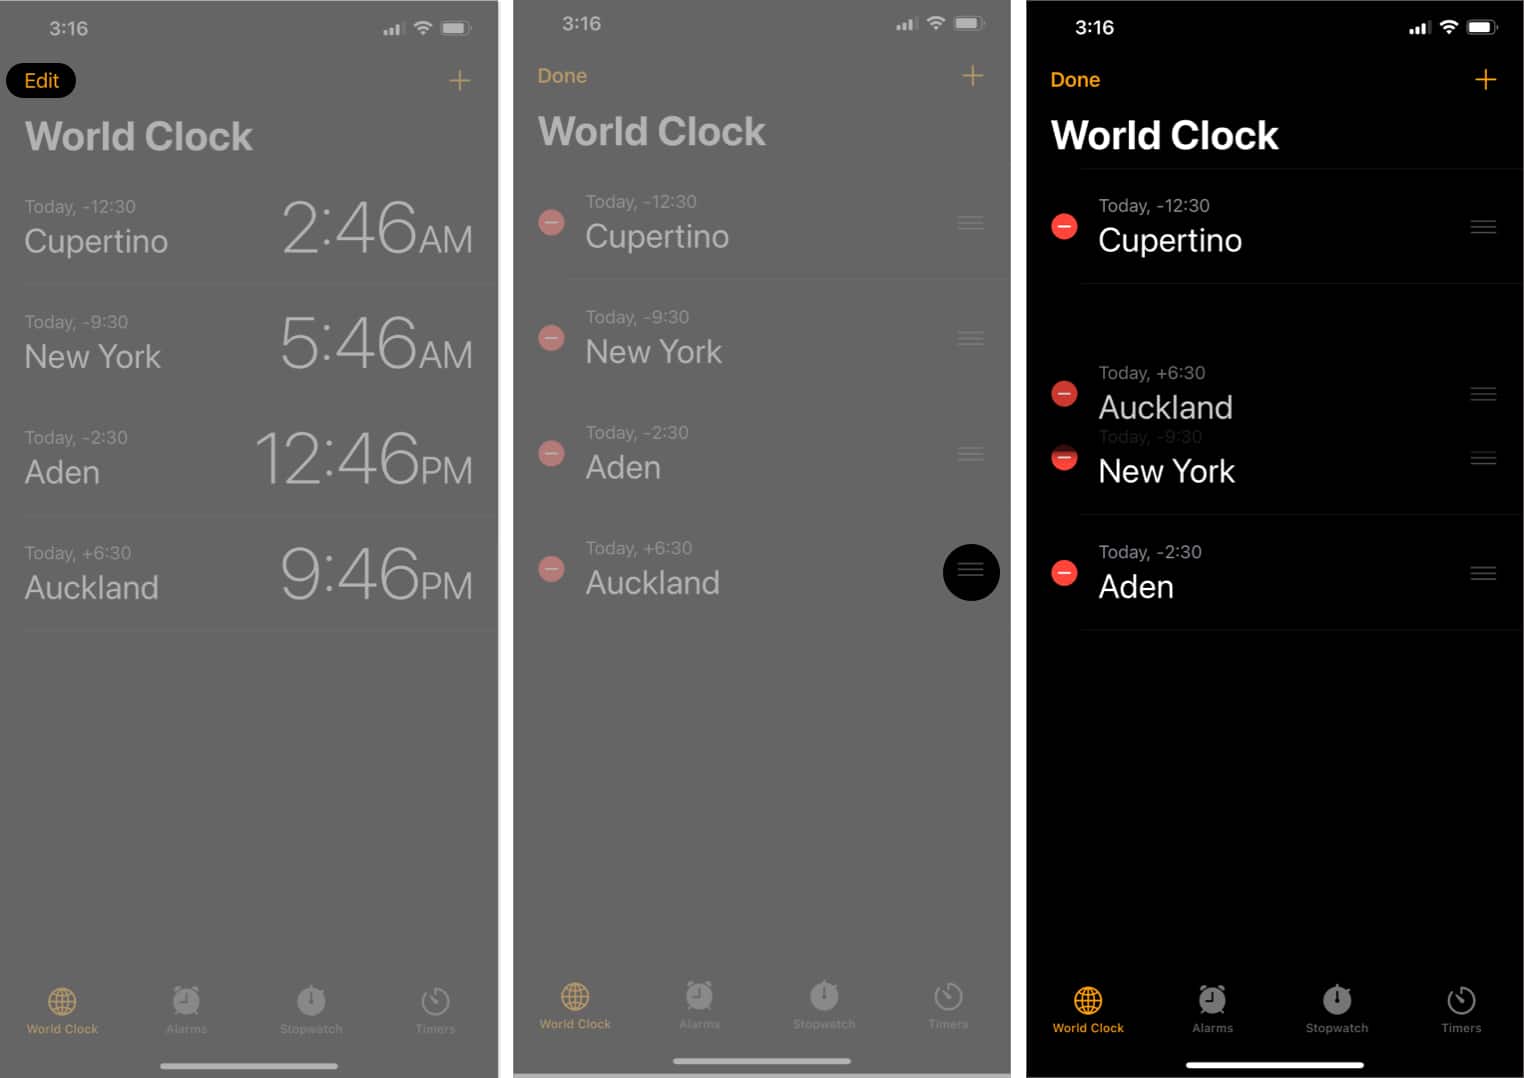 Edit and Rearrange World Clock with three-layered sandwich icon